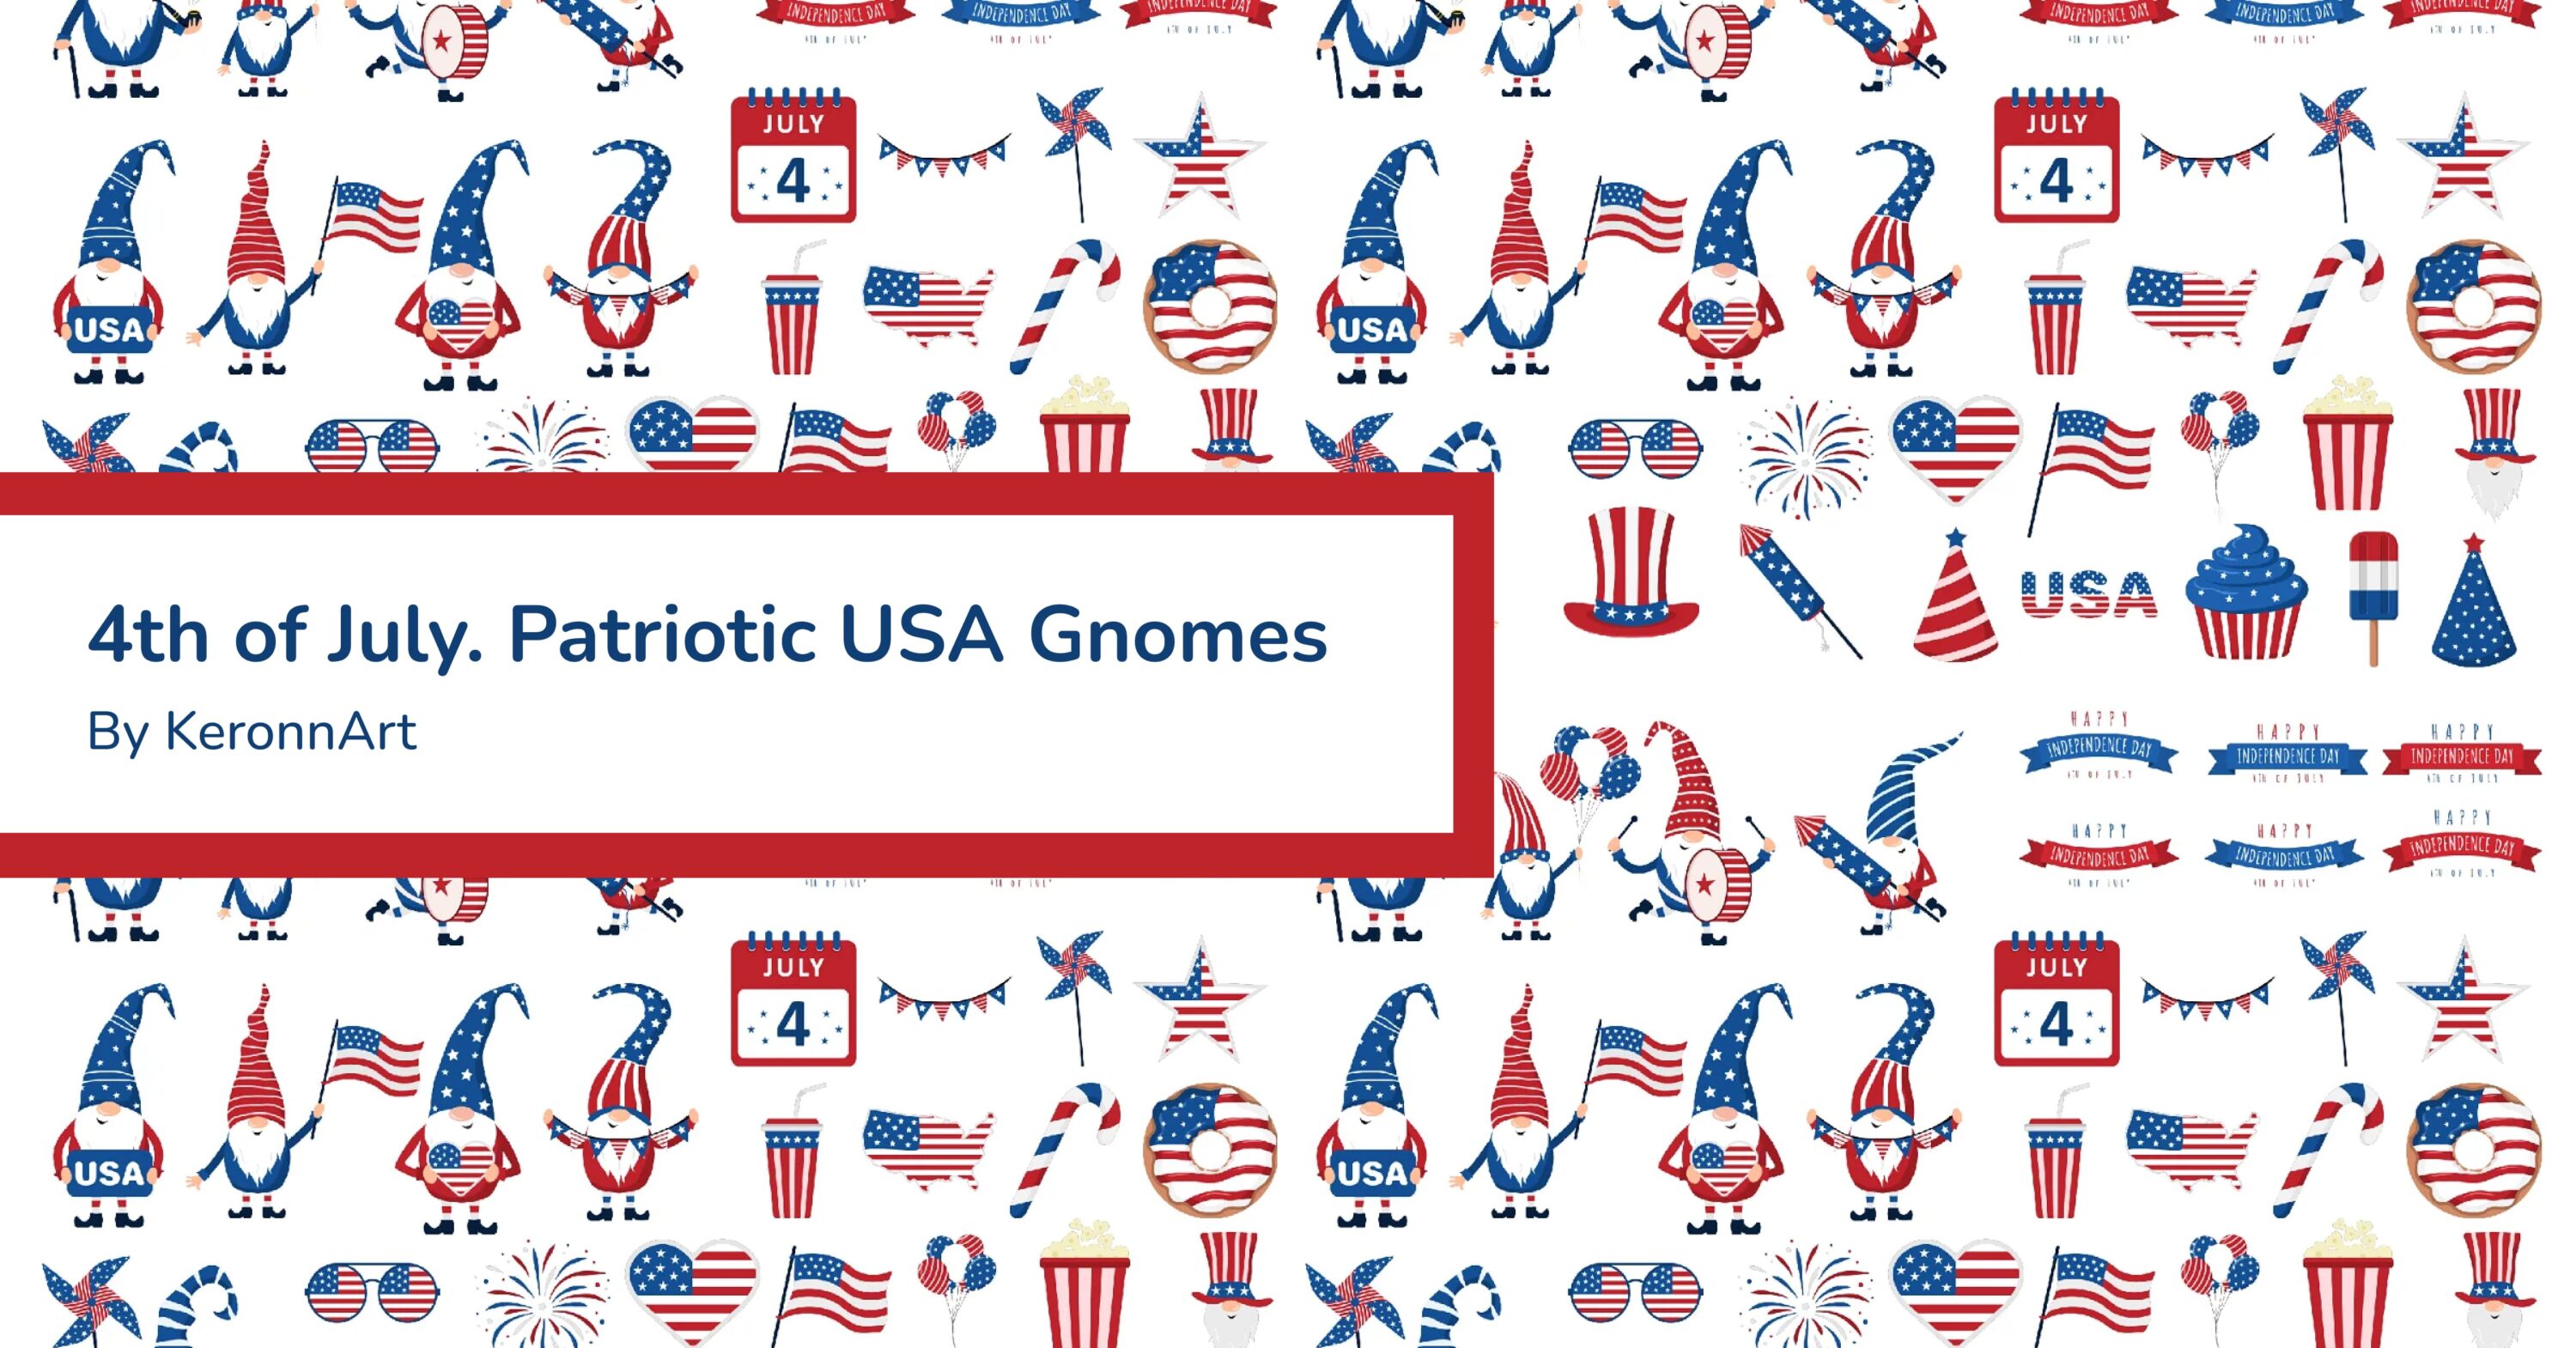 4th of July. Patriotic USA Gnomes facebook image.